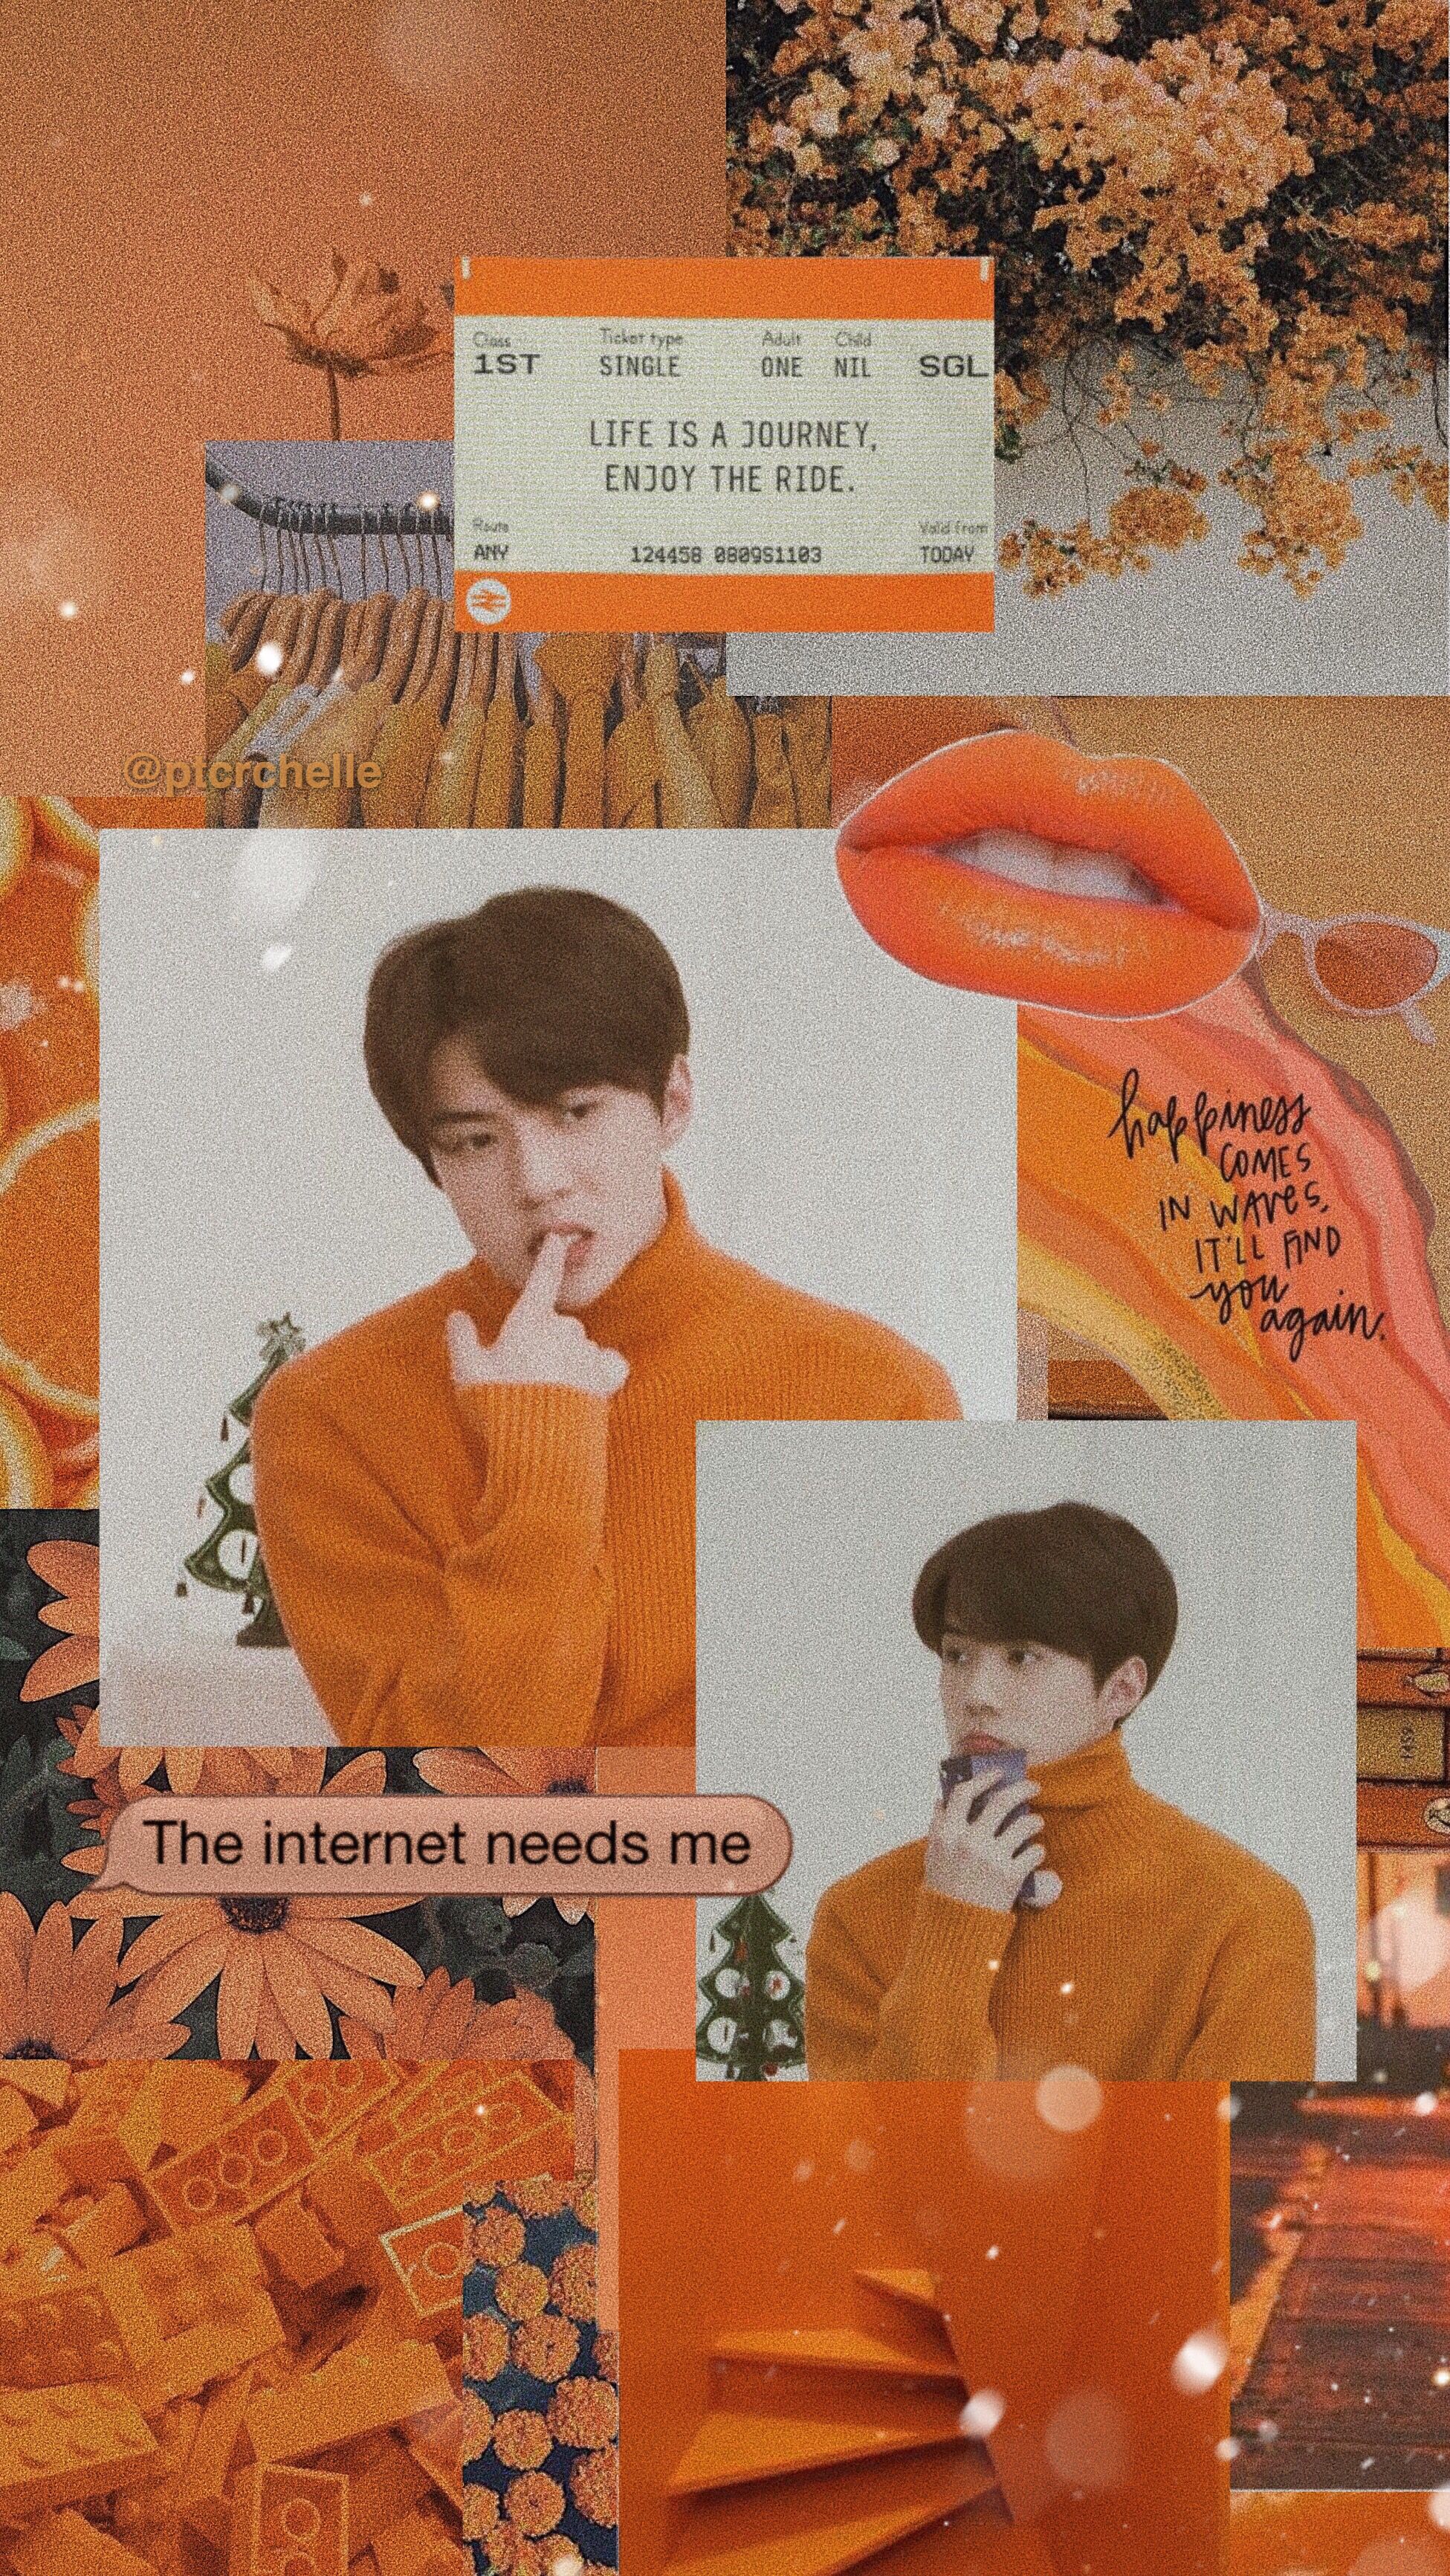 Sehun exo in orange tumblr aesthetic lockscreen wallpaper ig ptcrchelle sehun exo sehun exo